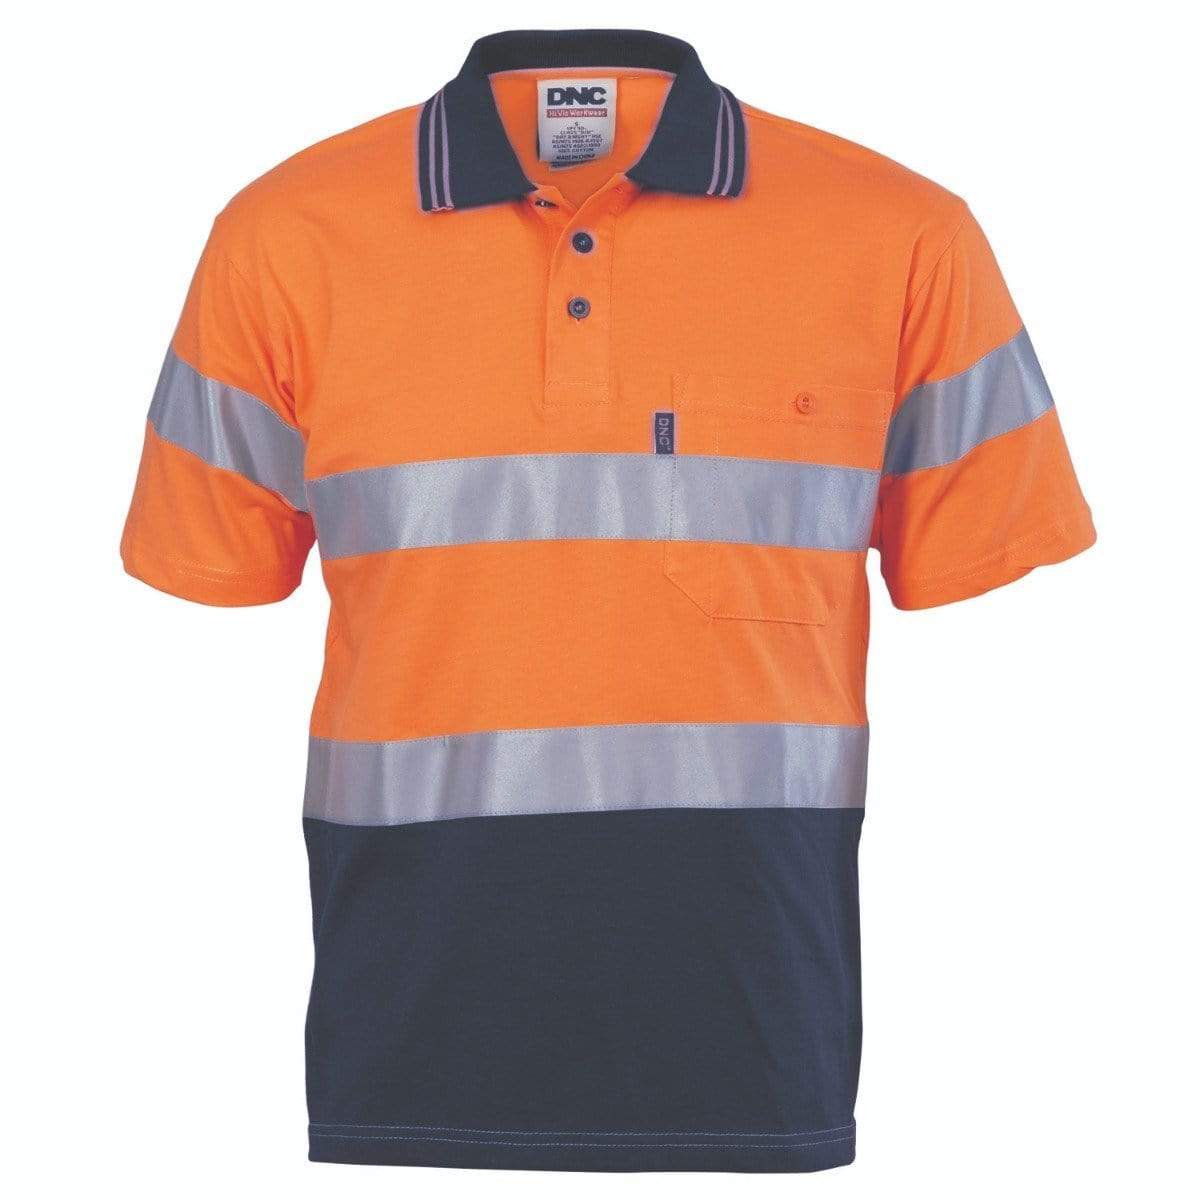 Dnc Workwear Hi-vis Cool-breeze Cotton Jersey Short Sleeve Polo With Csr Reflective Tape - 3915 Work Wear DNC Workwear Orange/Navy S 